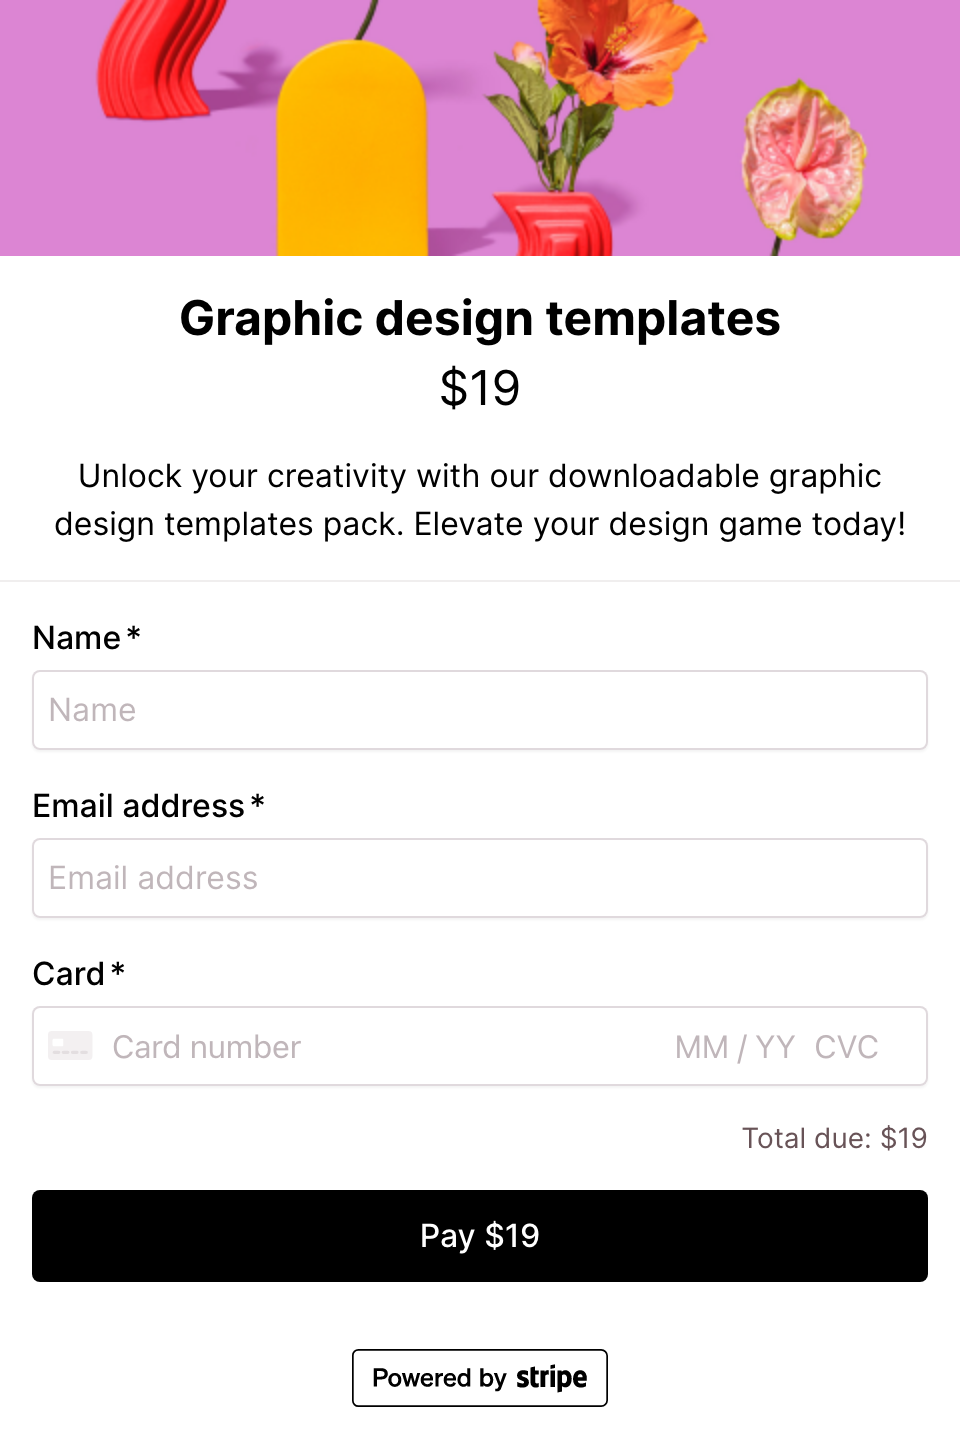 Graphic design templates checkout form